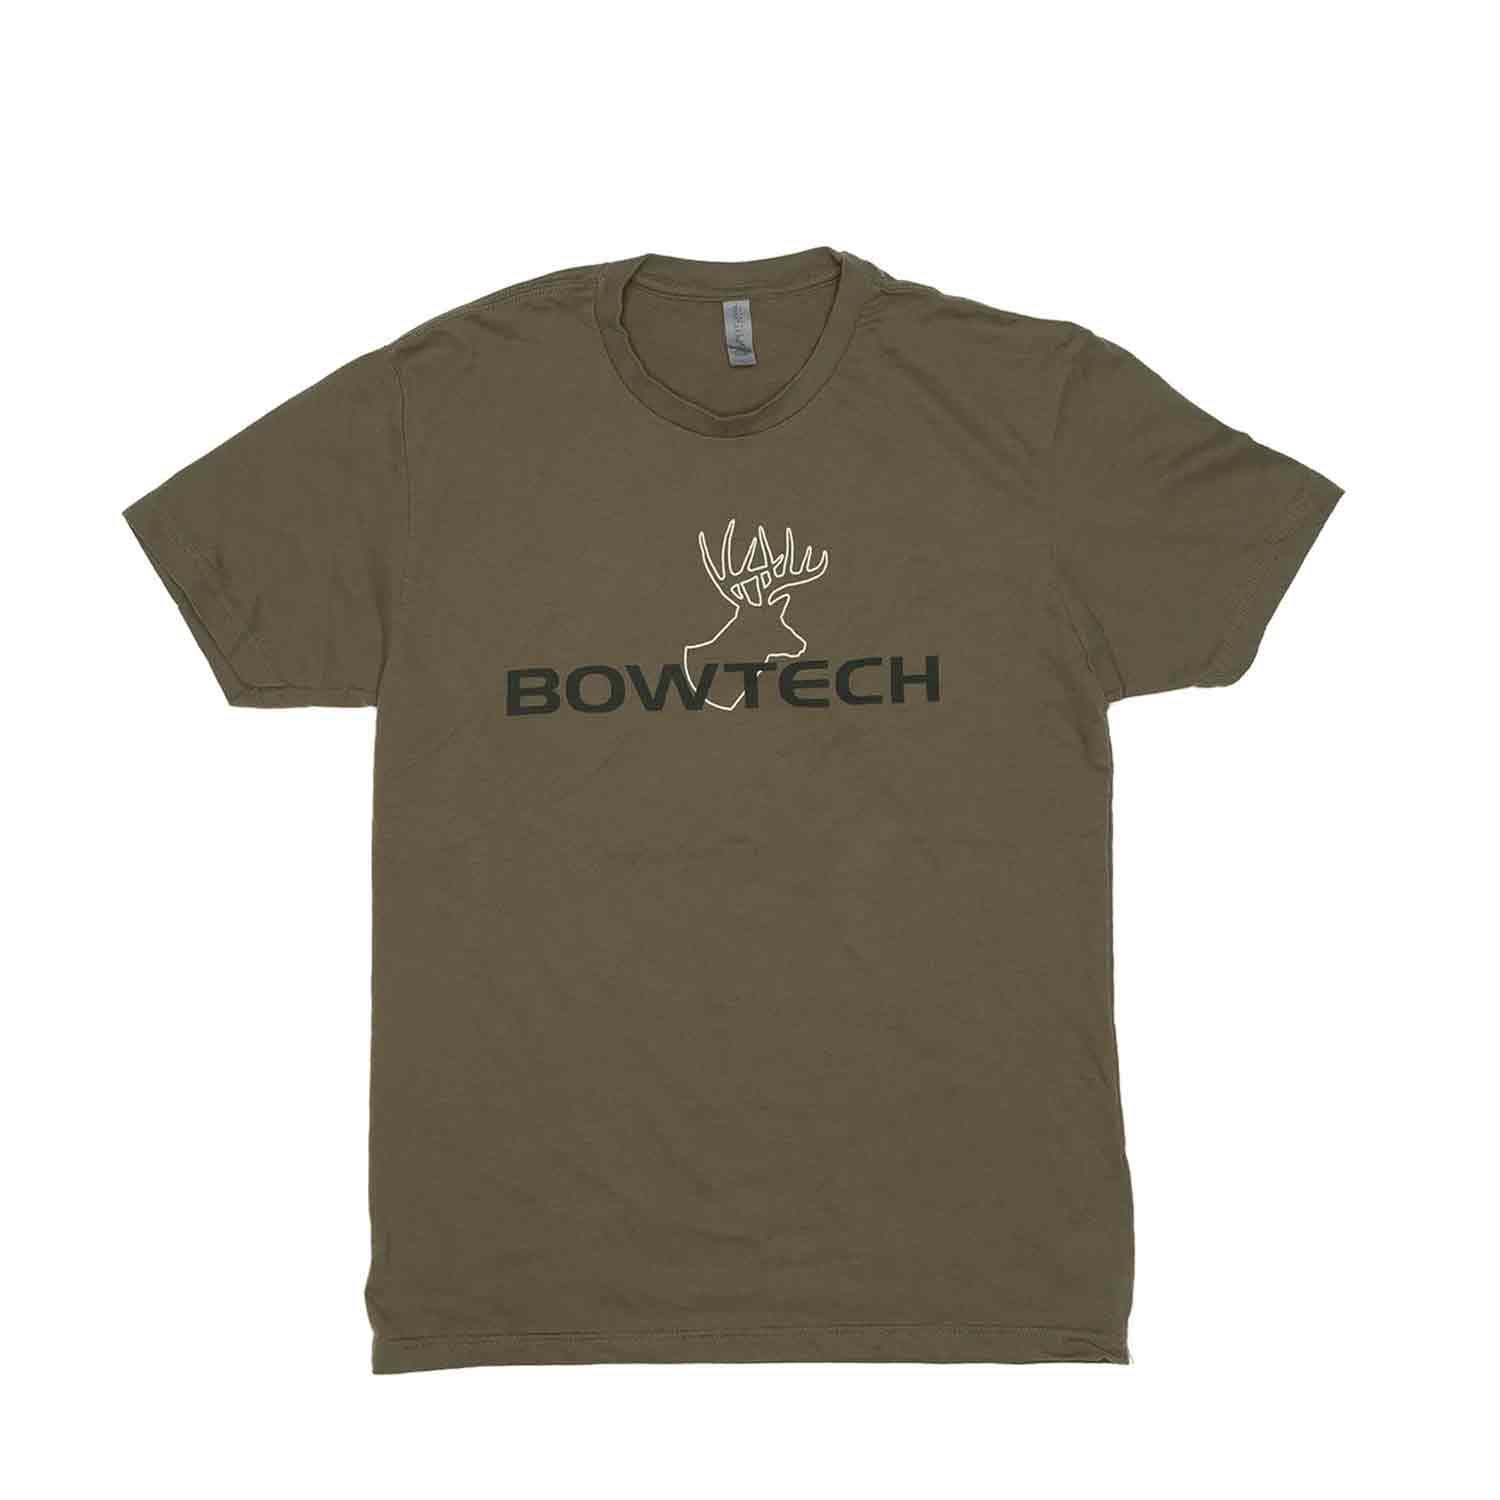 Bowtech Mounted Deer Tee